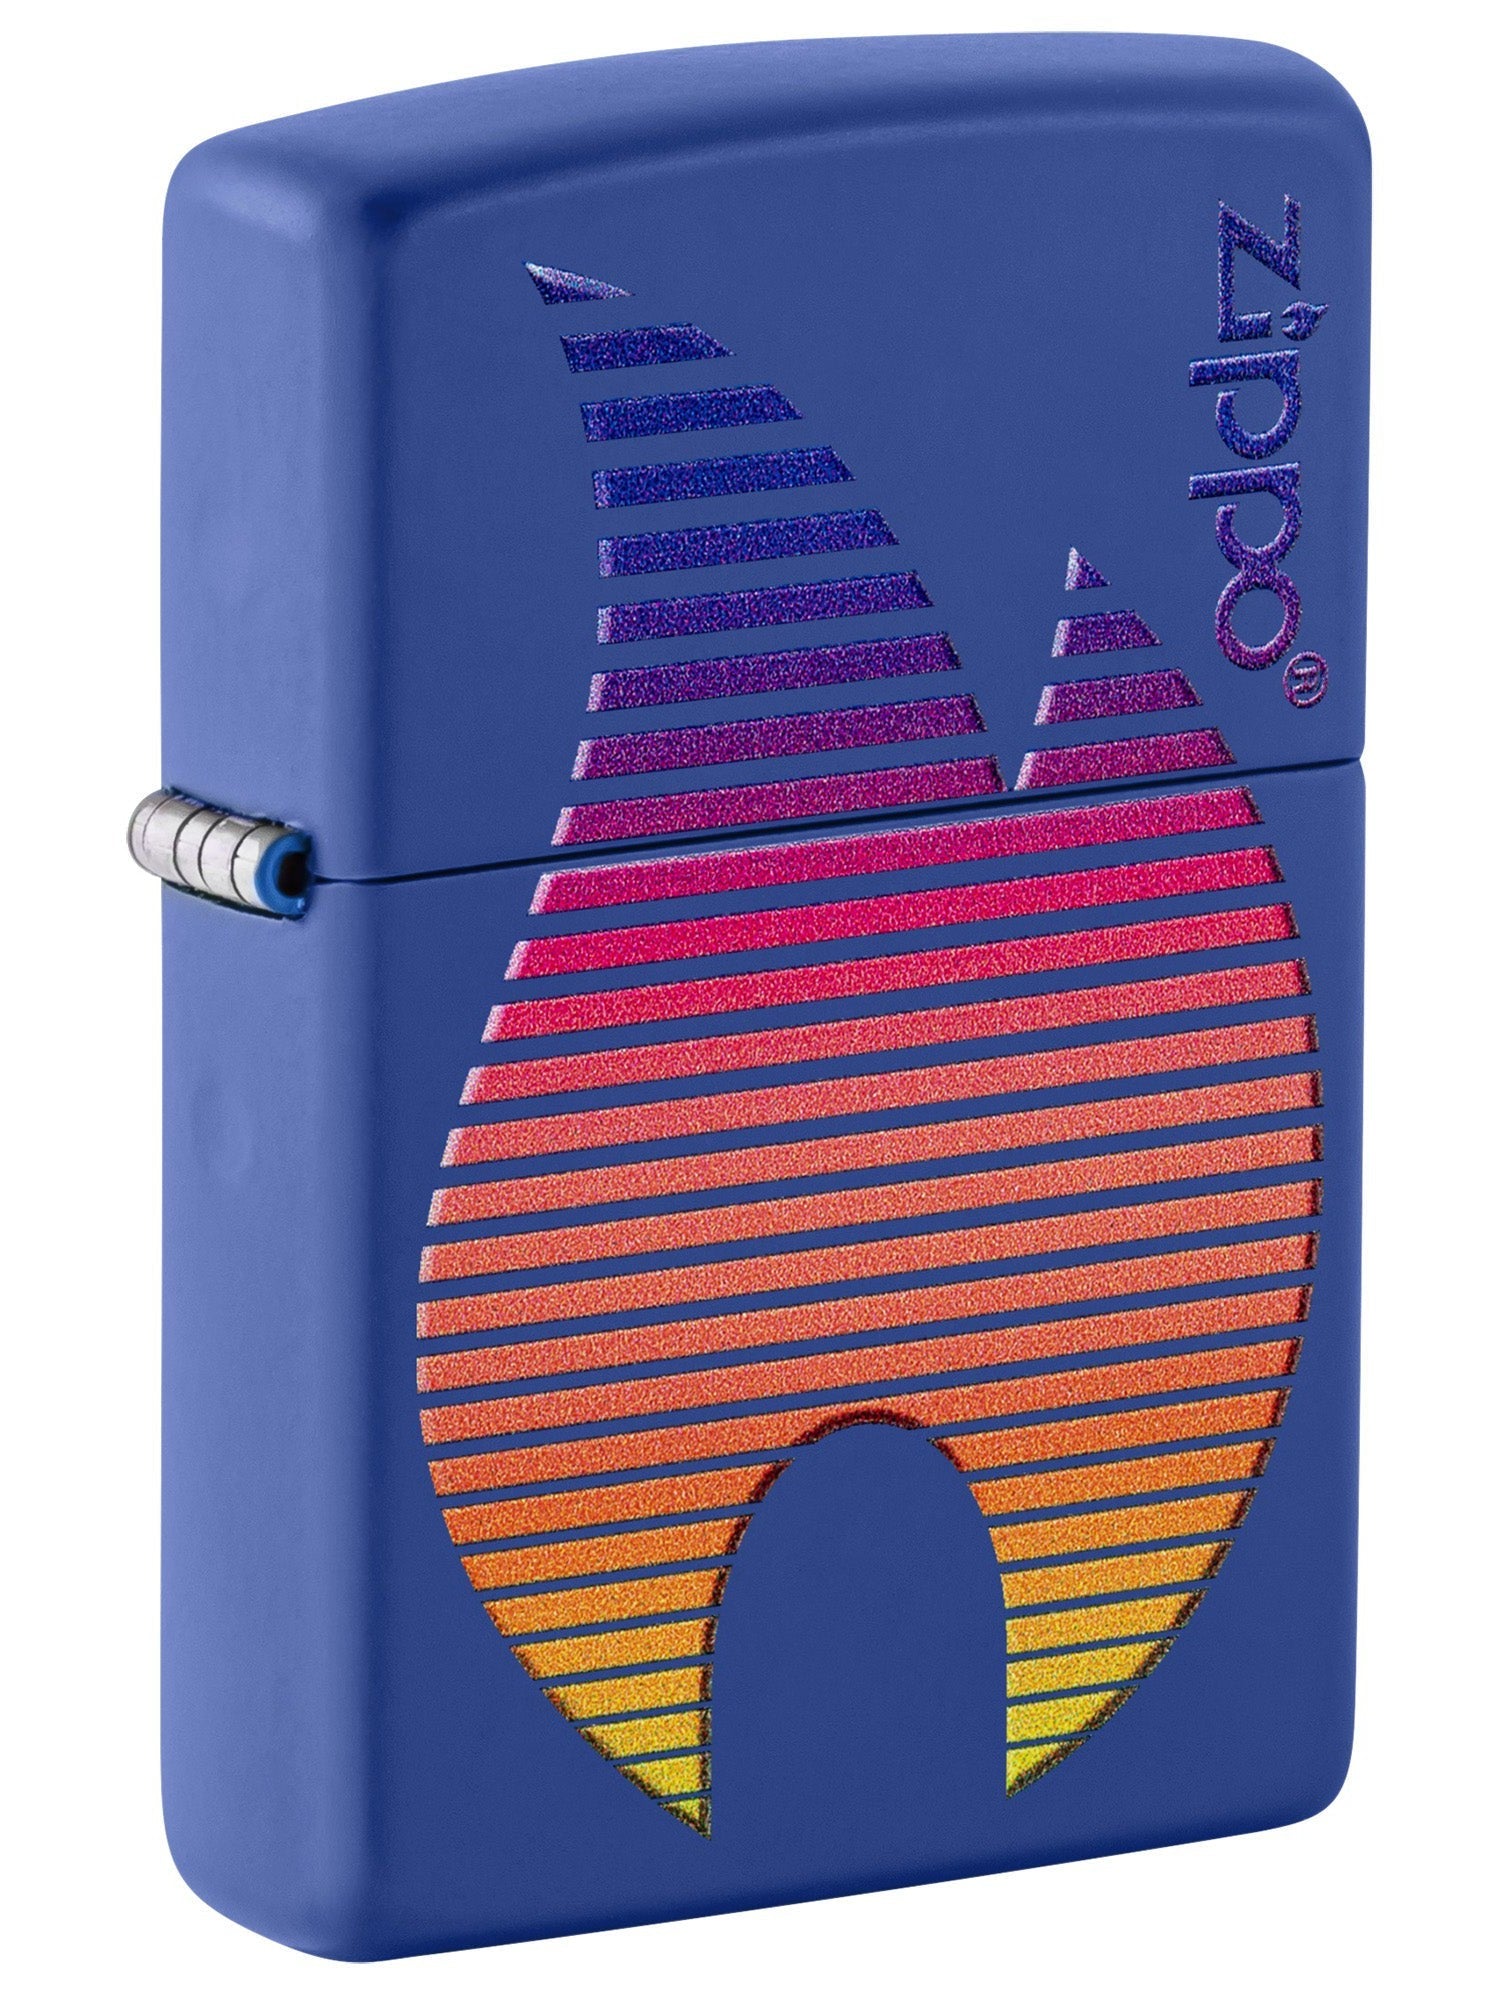 Zippo Lighter: Zippo Flame Design - Royal Blue Matte 48996